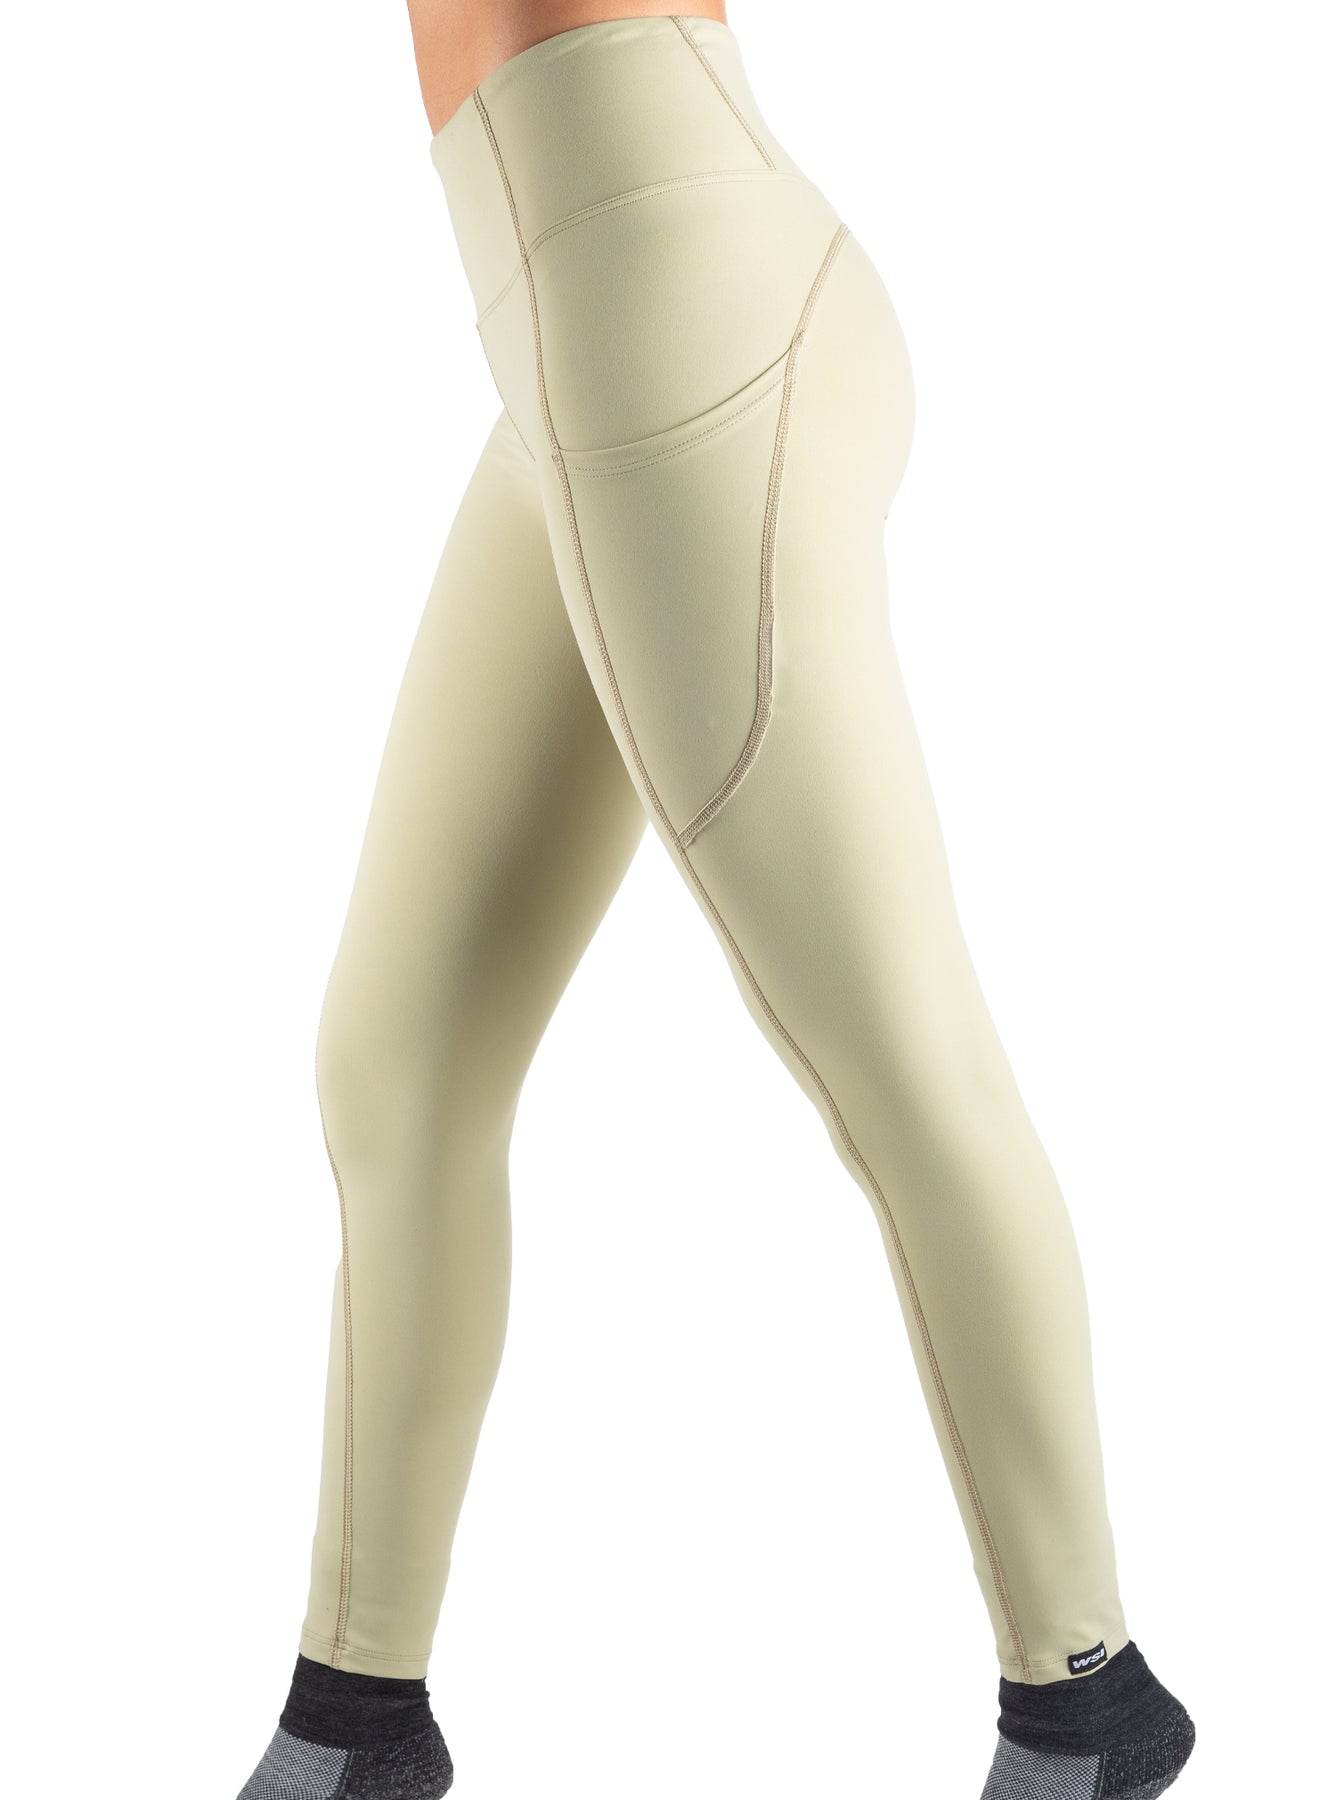 Tek Gear Leggings Womens Size Large Green Yellow Activewear Athletic  Running - General Maintenance & Diagnostics Ltd